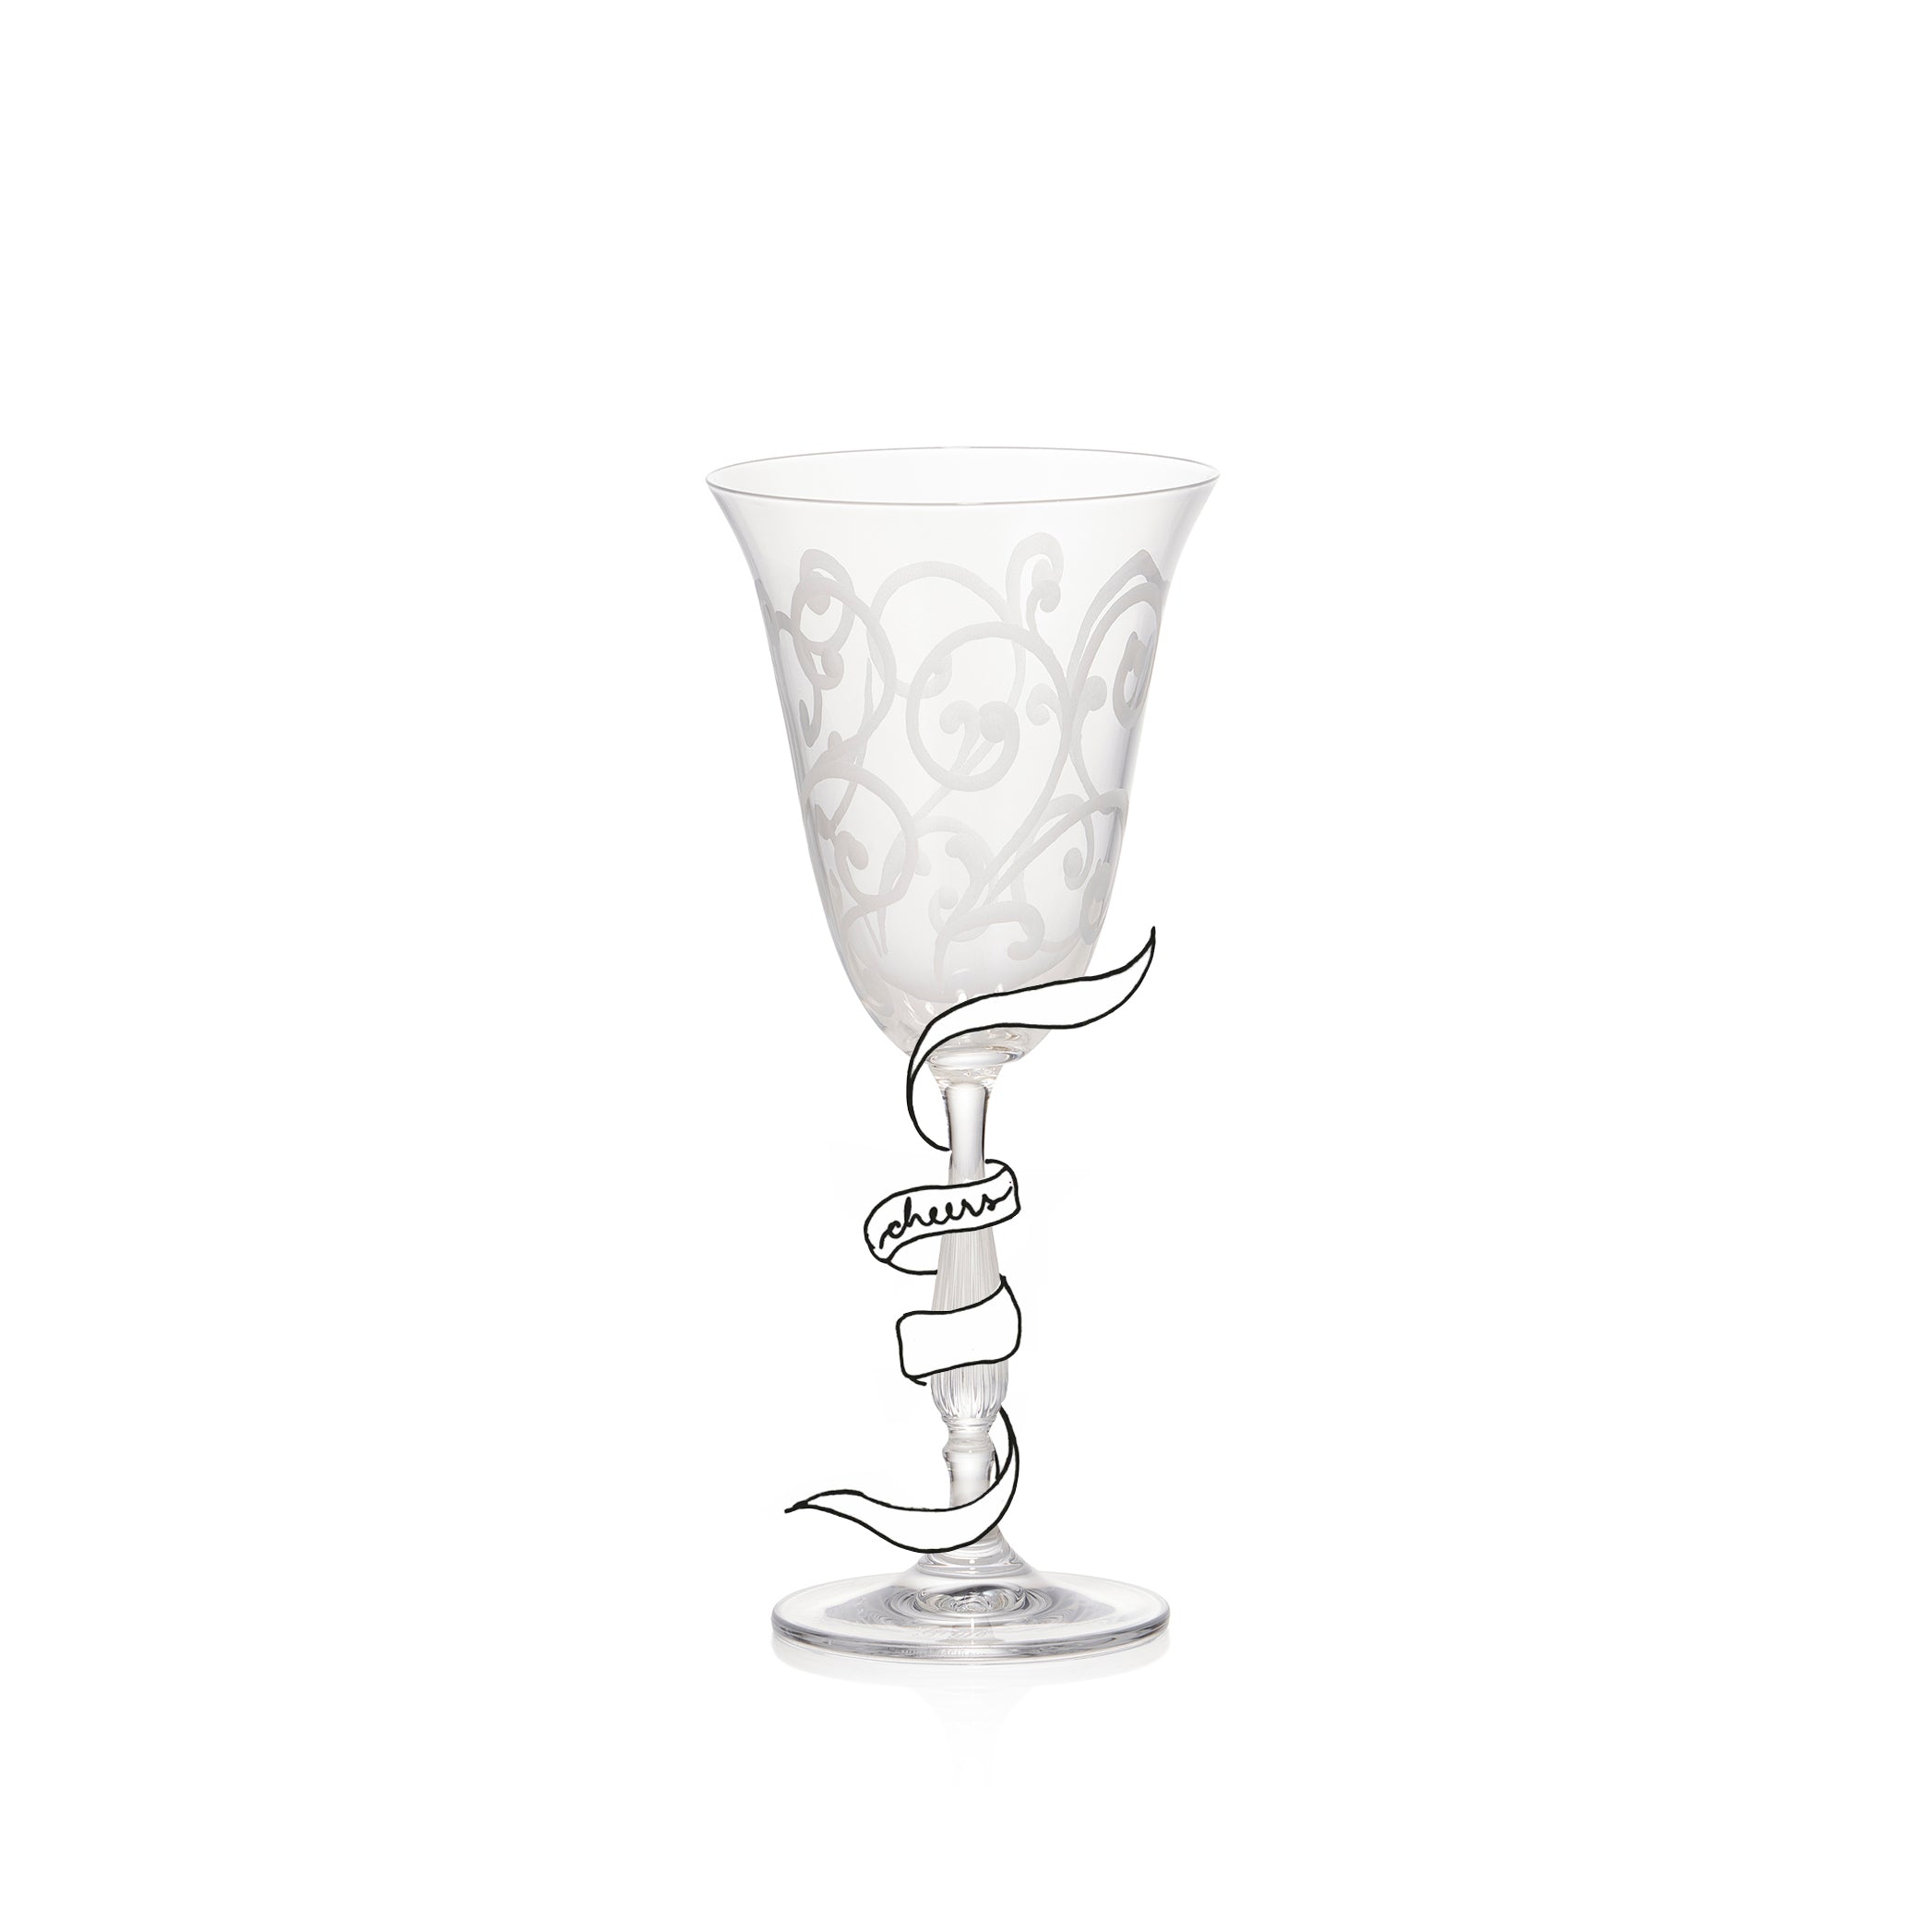 Ribbon Hand-Engraved White Wine Glass, 22cm